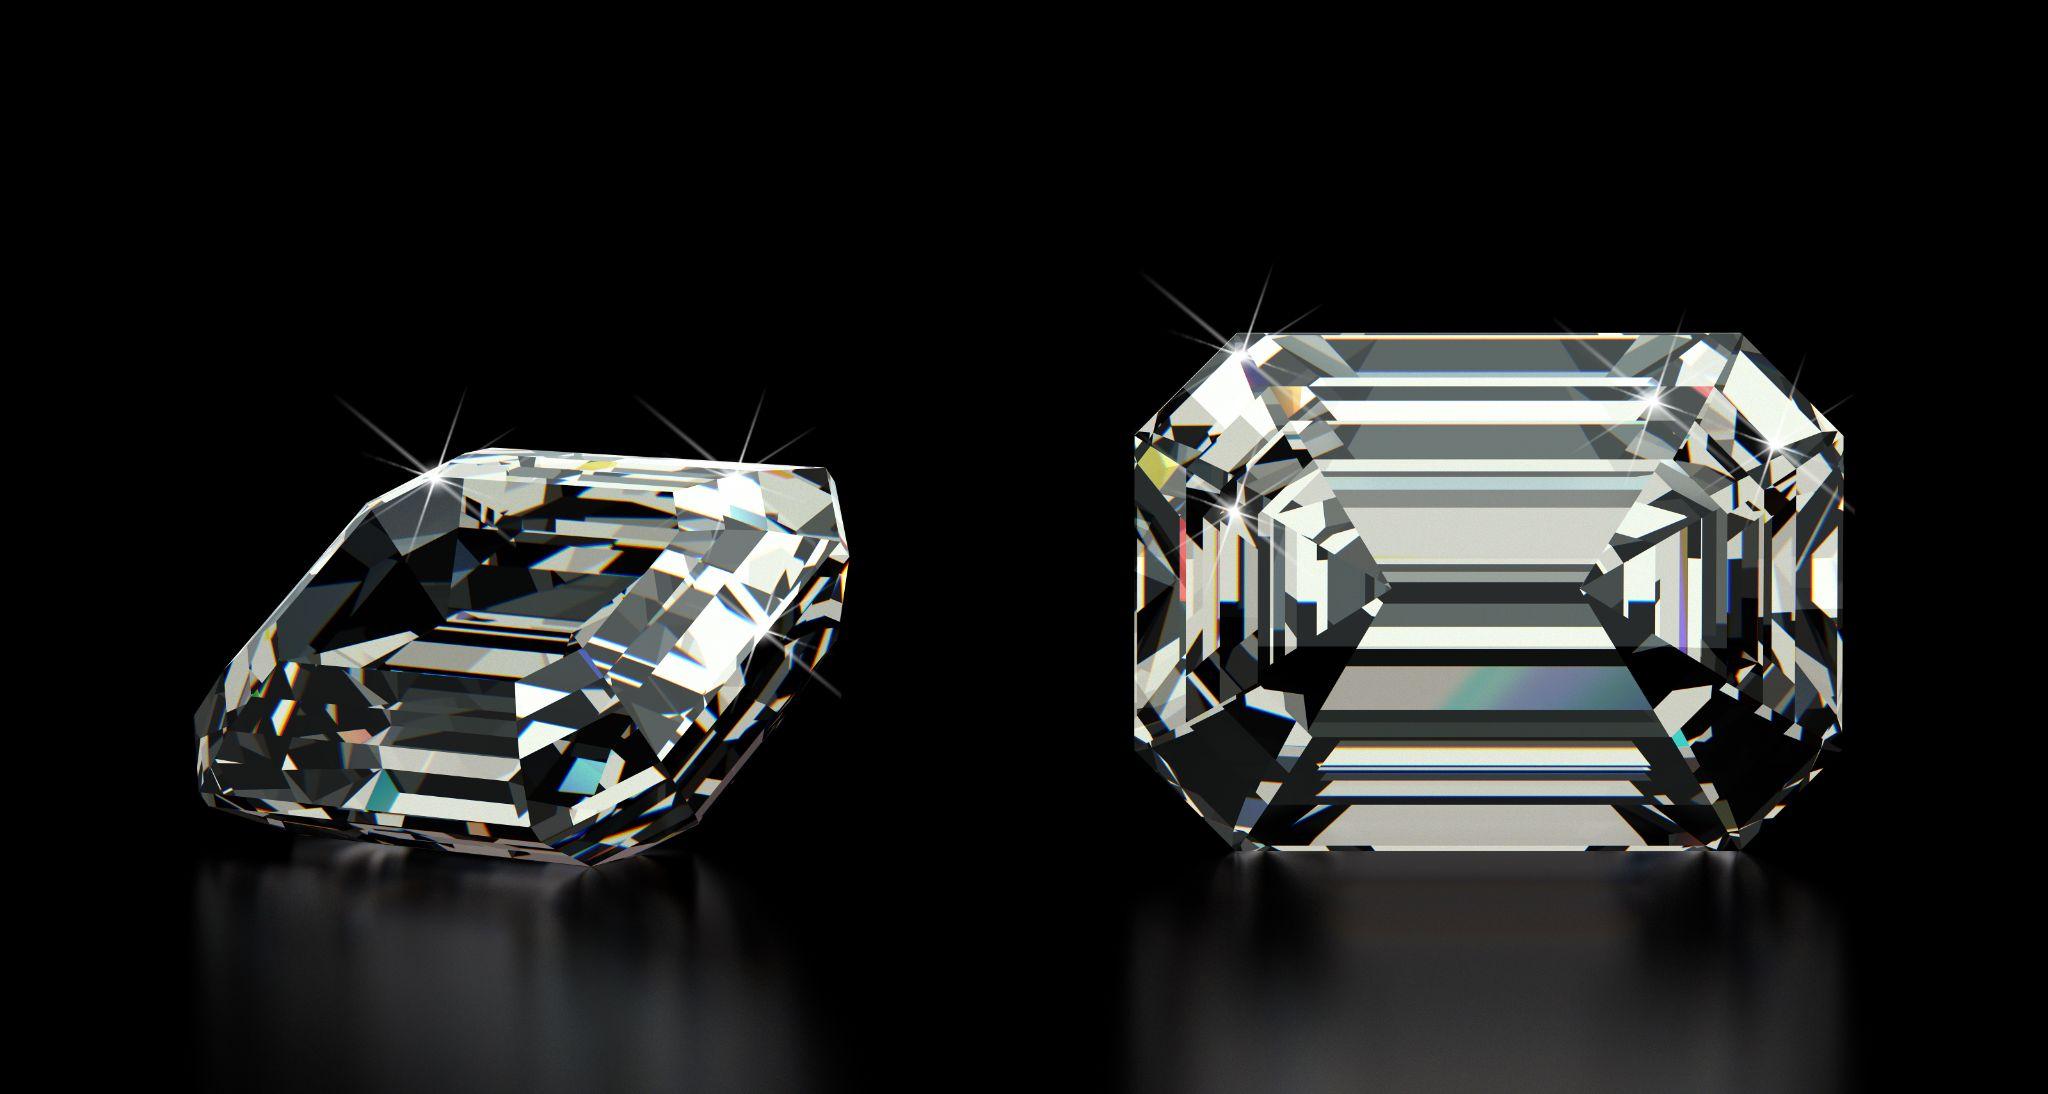 Emerald Cut Diamonds